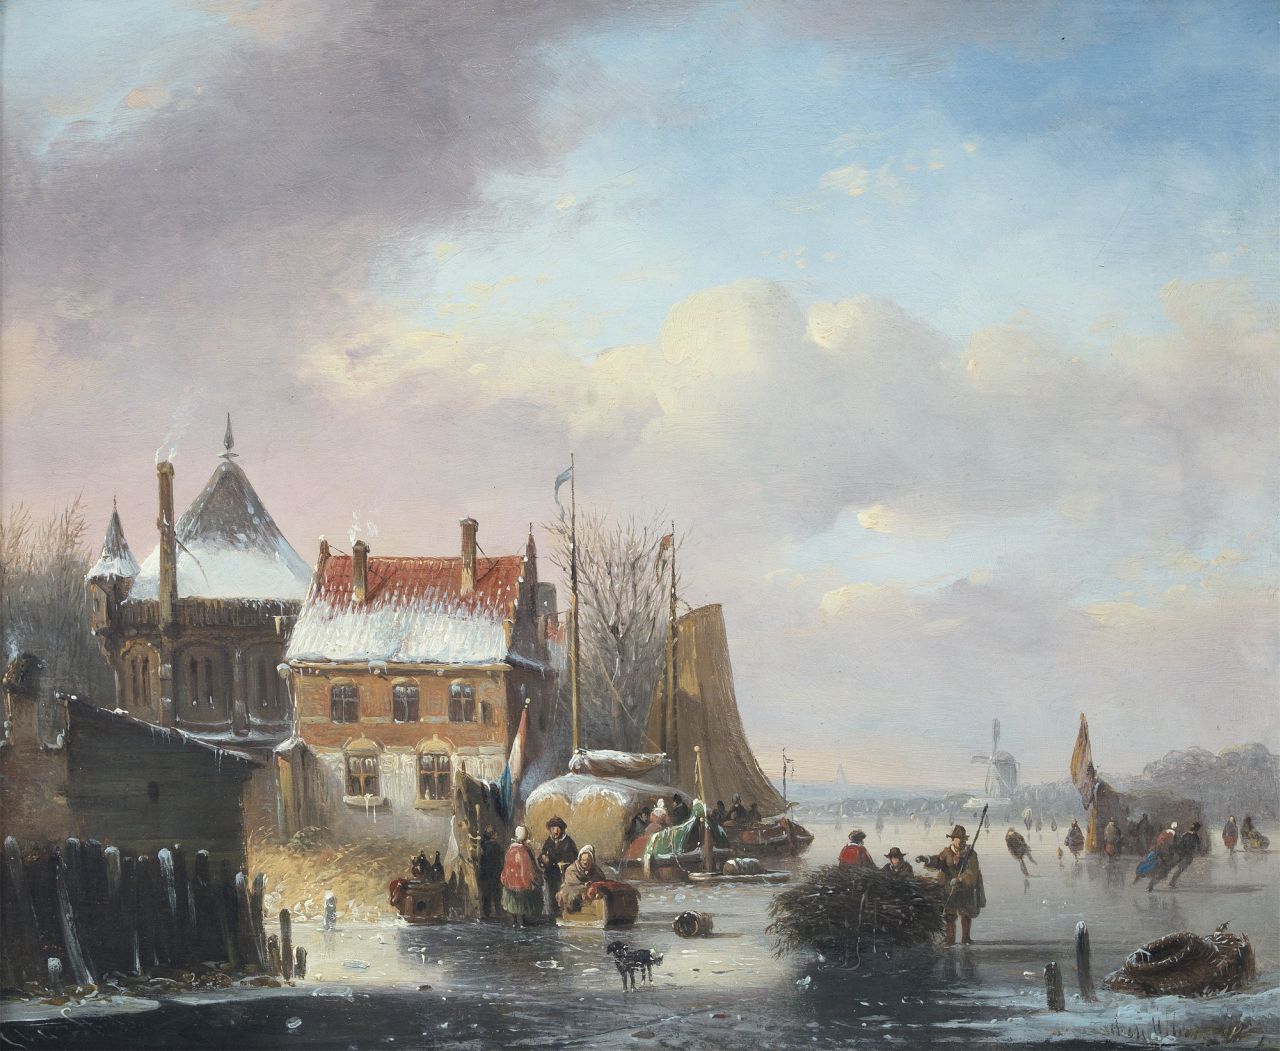 Stok J. van der | Jacobus van der Stok, Skaters on a frozen canal, oil on panel 23.2 x 27.9 cm, signed l.l.